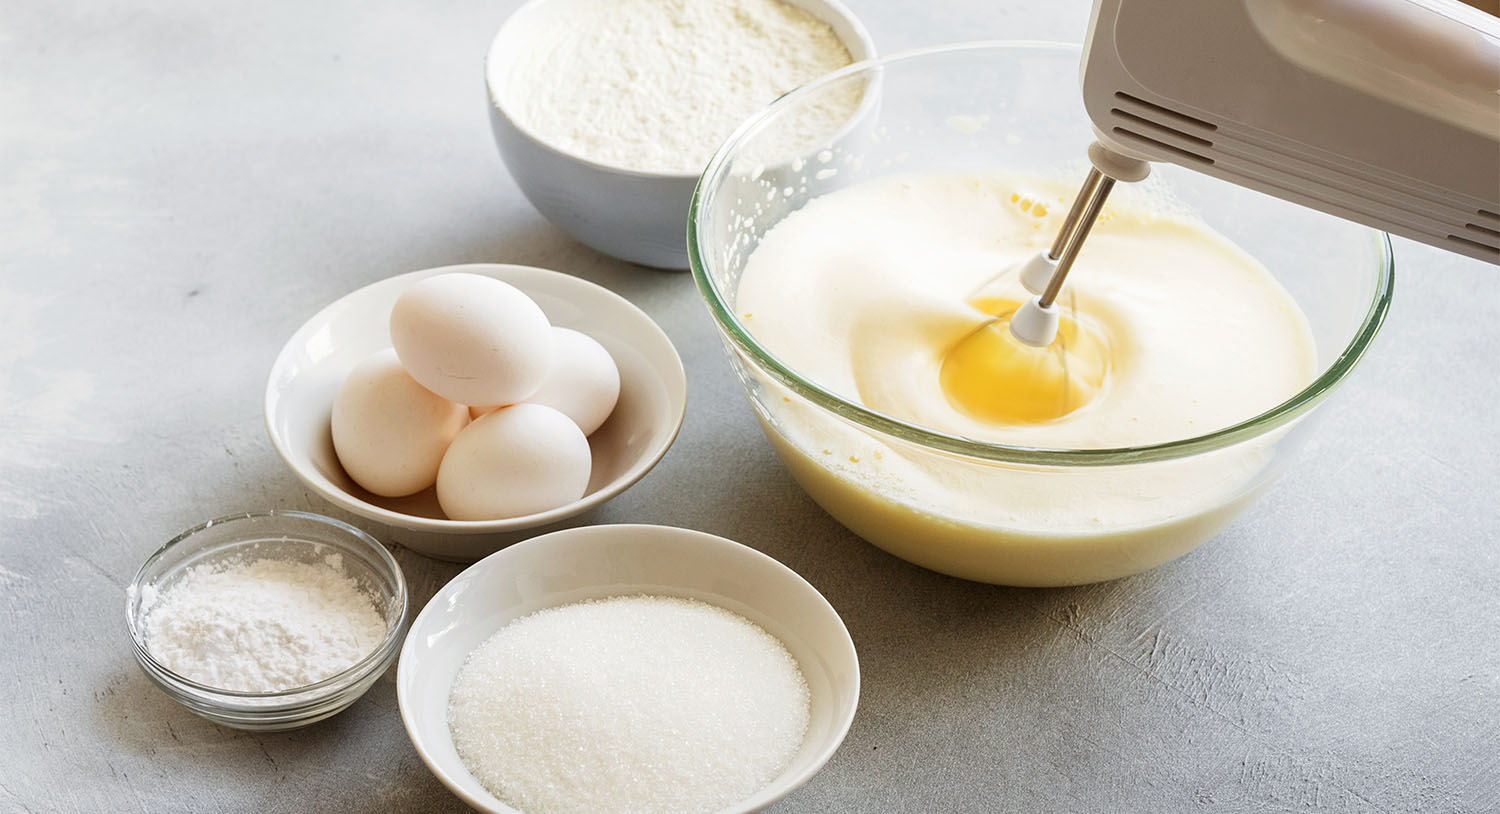 miska-z-cukrem-miska-z-mąką-miska-z-jajkami-miksowanie-jajek-robot-kuchenny-ręczny-mikser-ręczny-ubijanie-jajek-ubijanie-śmietany